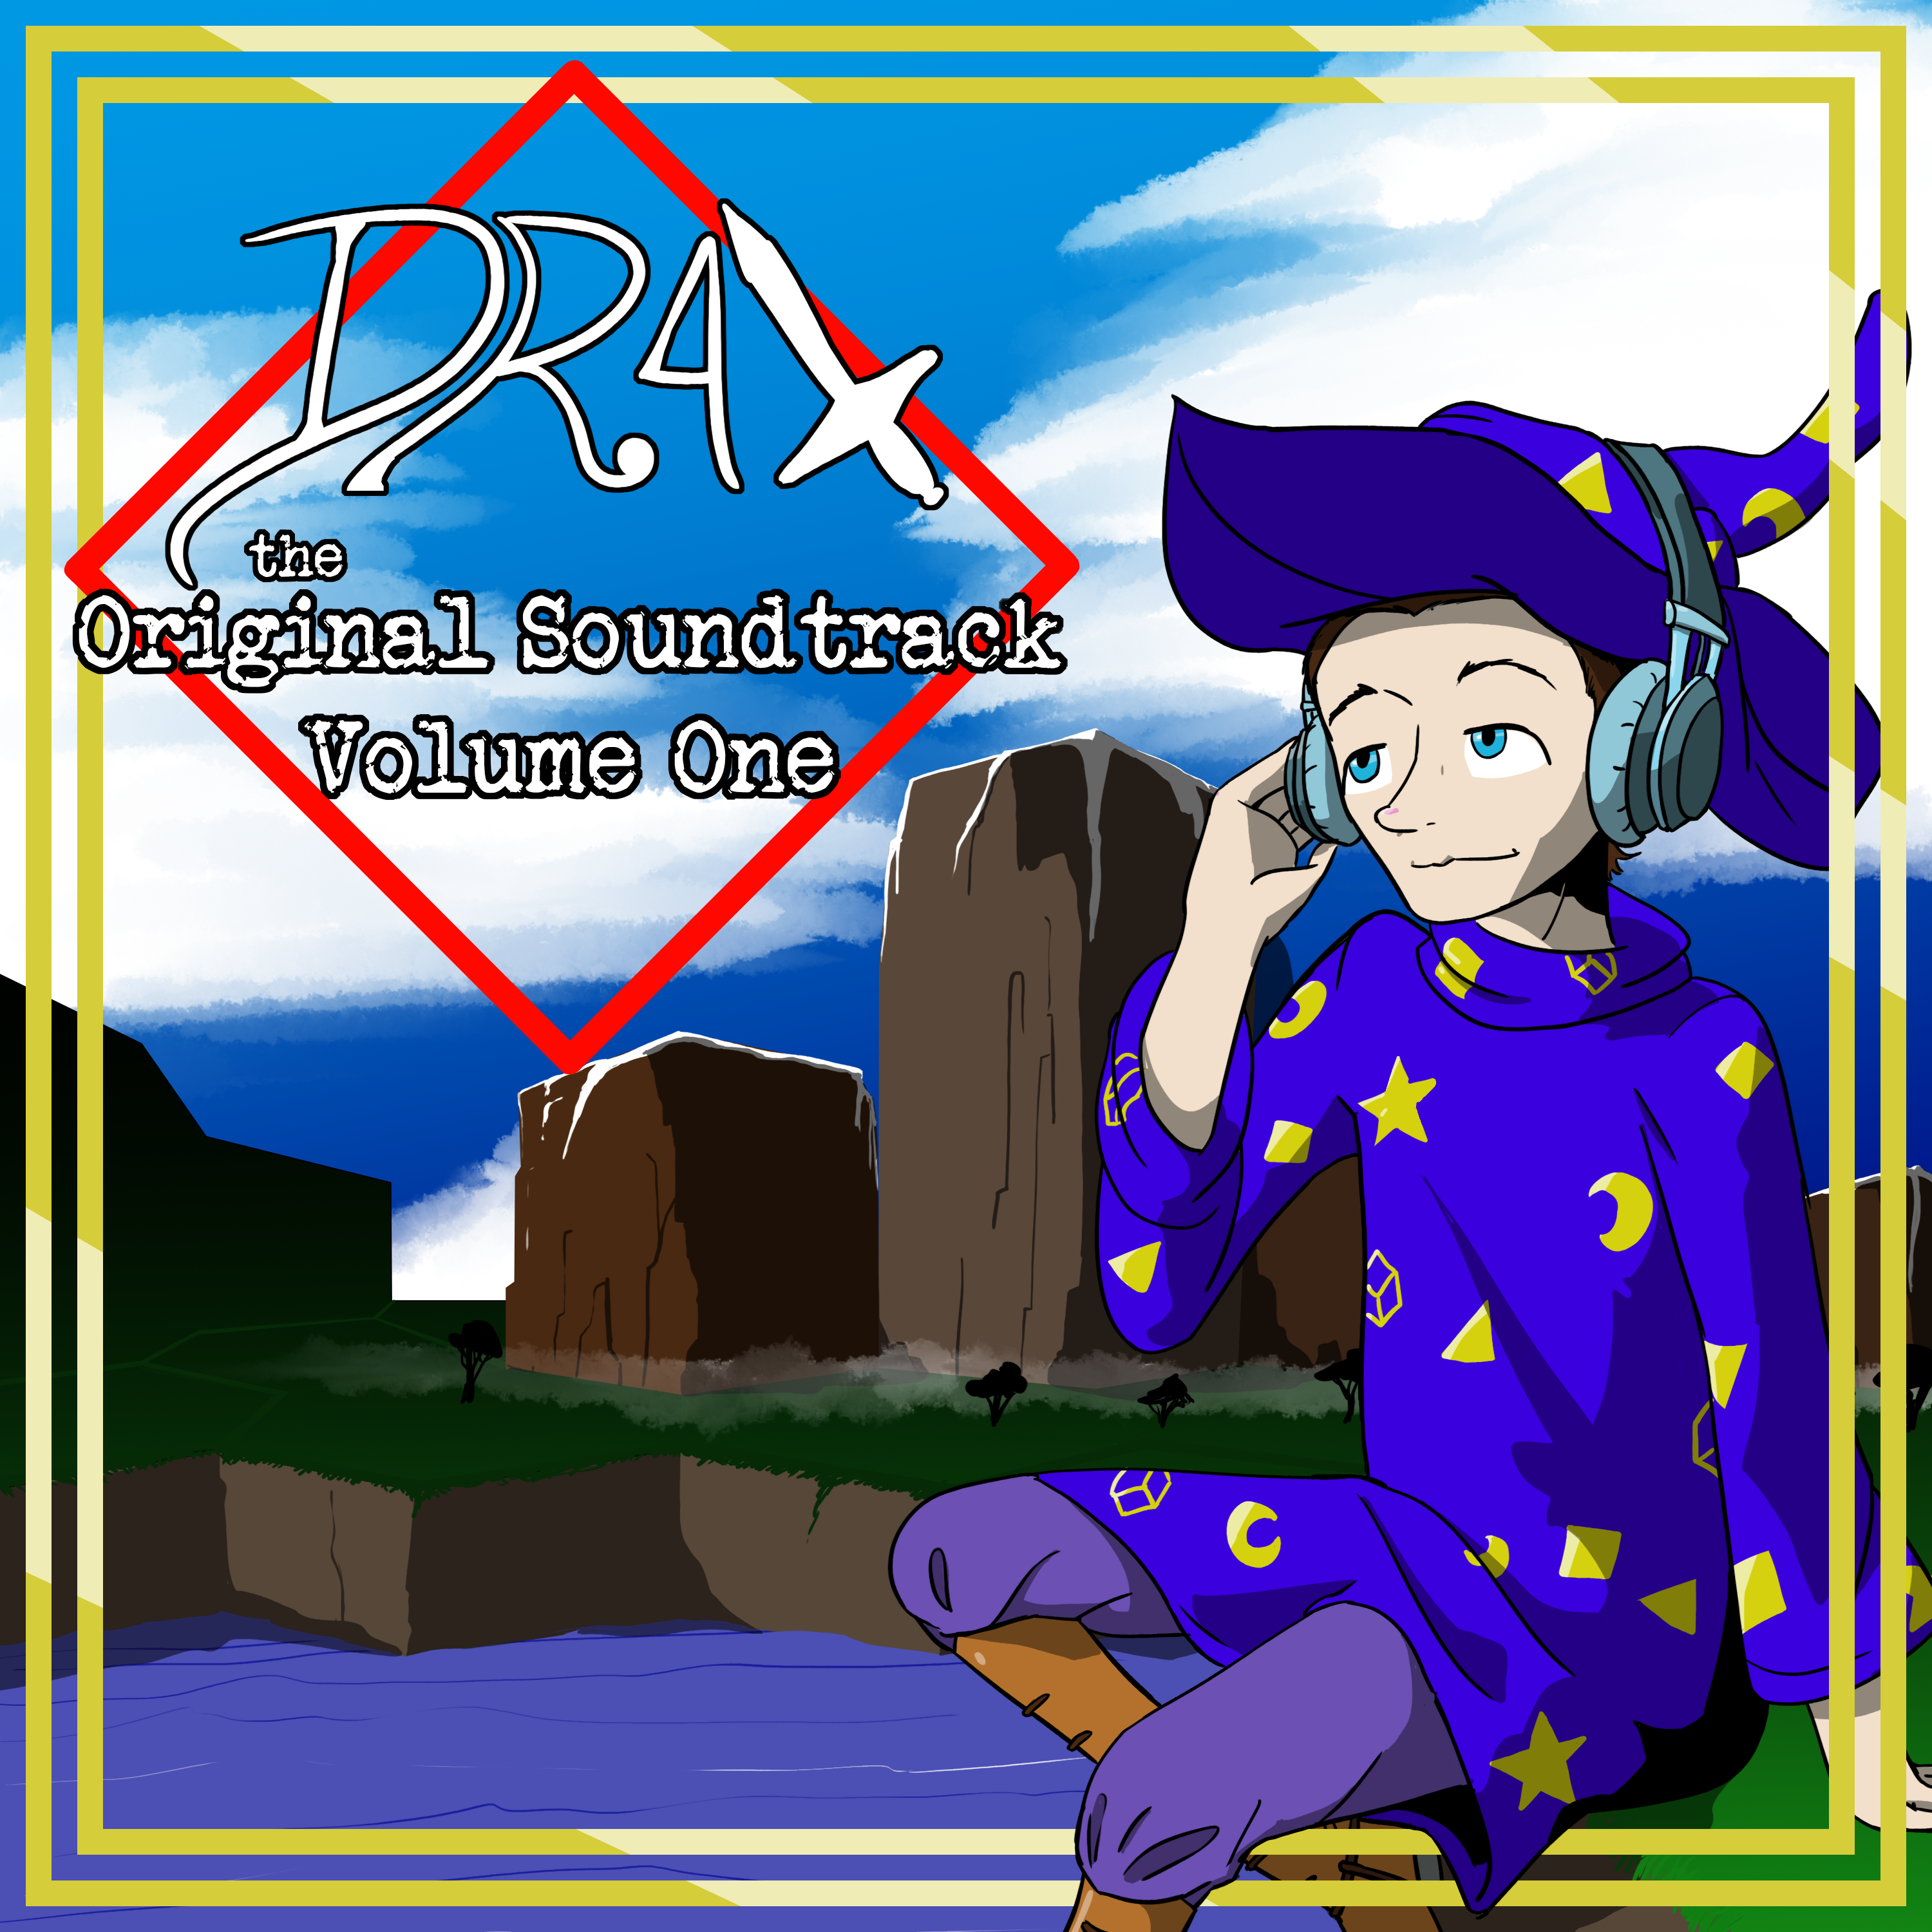 DR4X The Original Soundtrack Volume 1